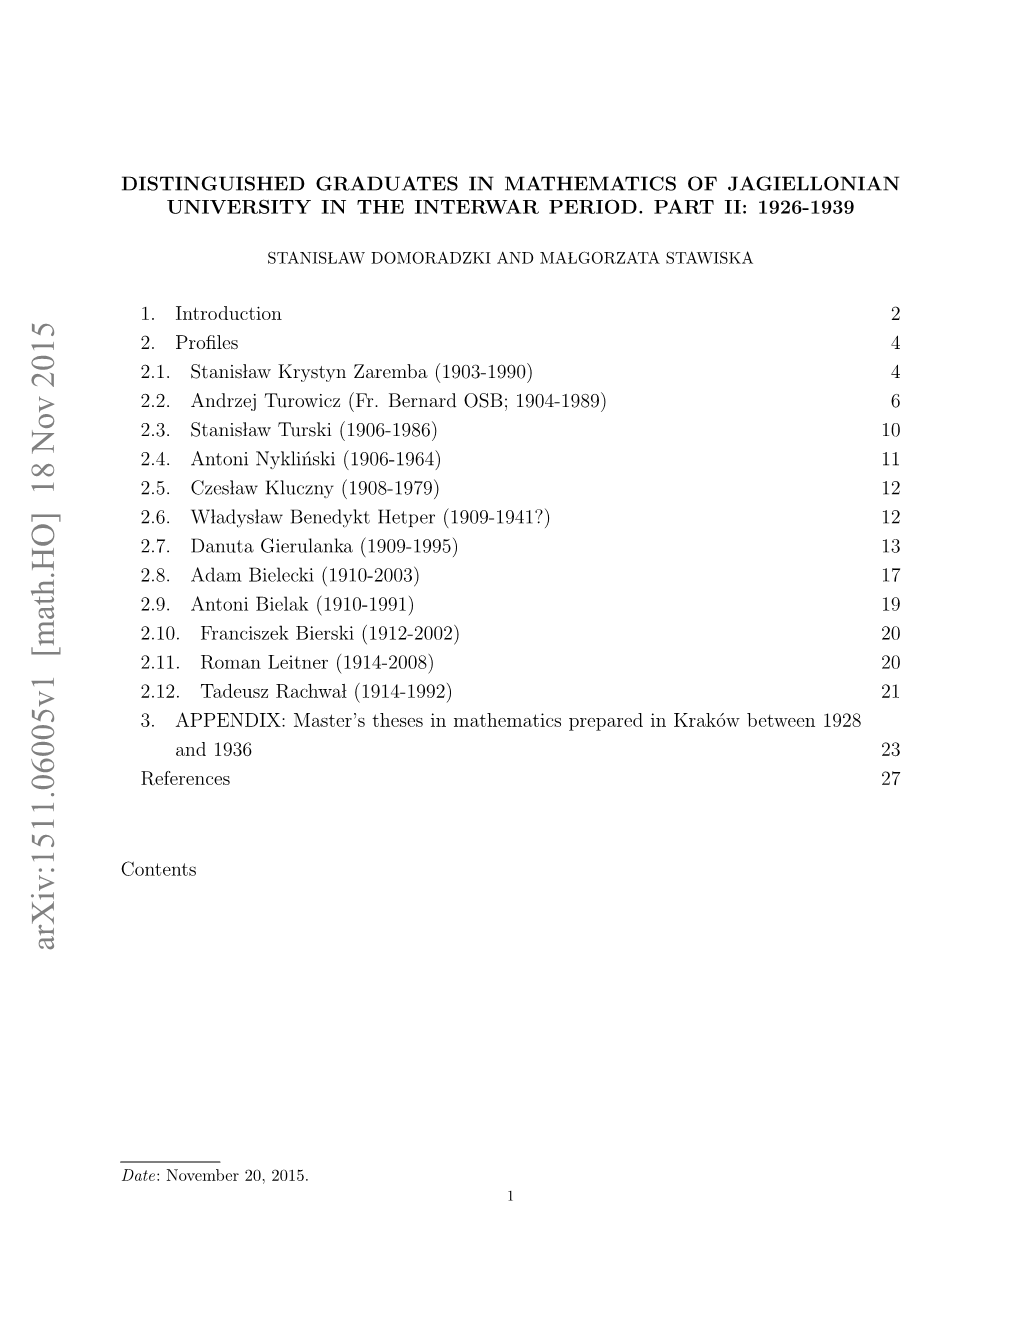 Distinguished Graduates in Mathematics of Jagiellonian University in the Interwar Period